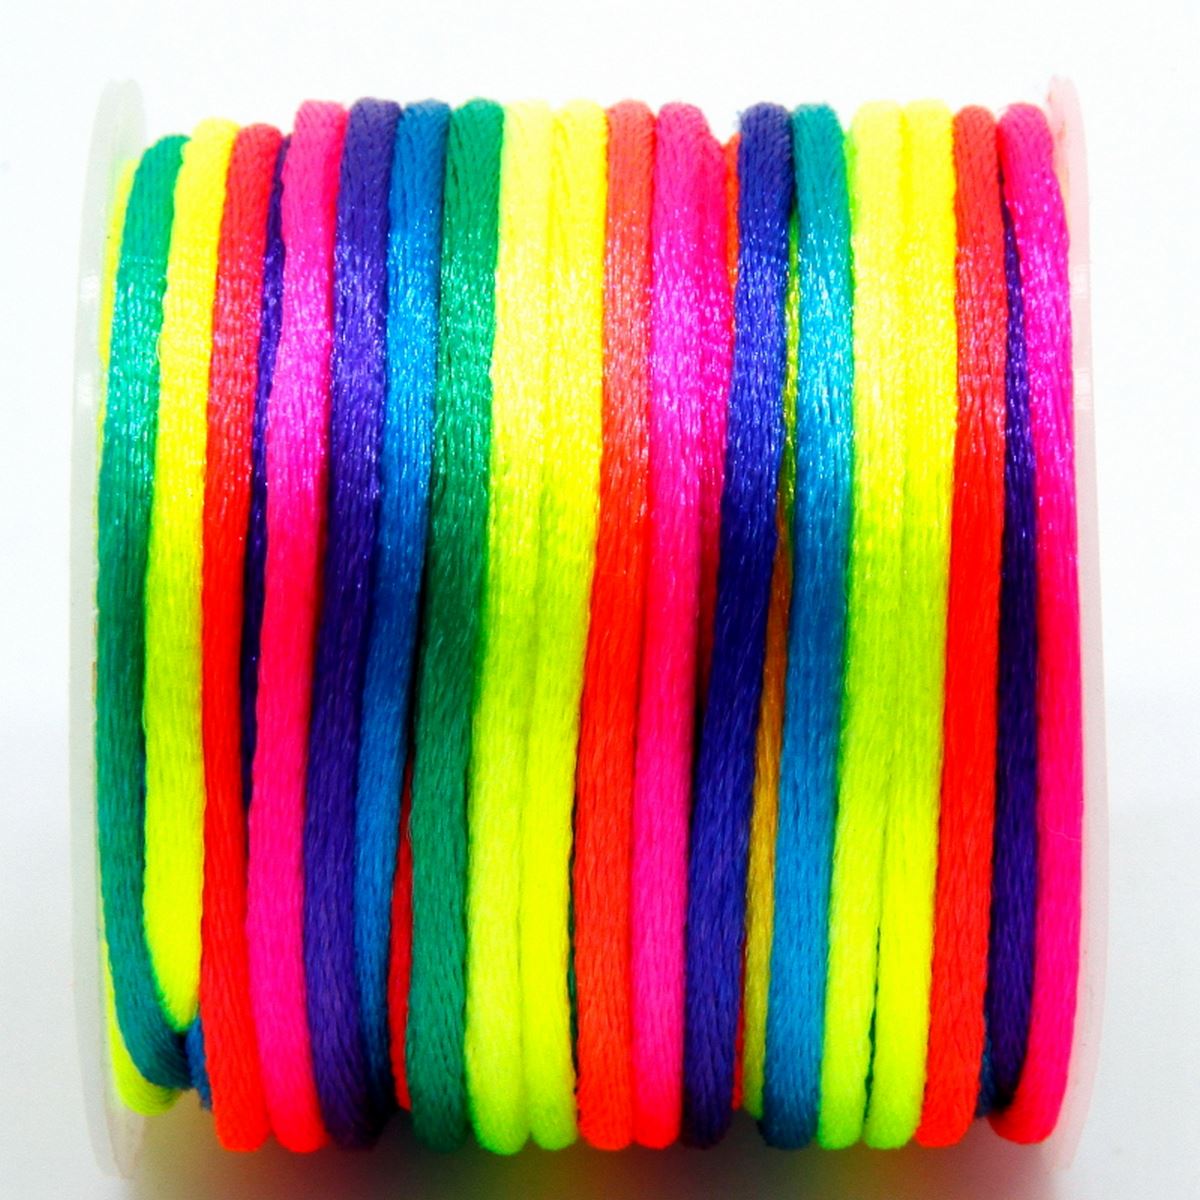 jags-mumbai Rope & Lace Neon Multicolored Thread 12pcs